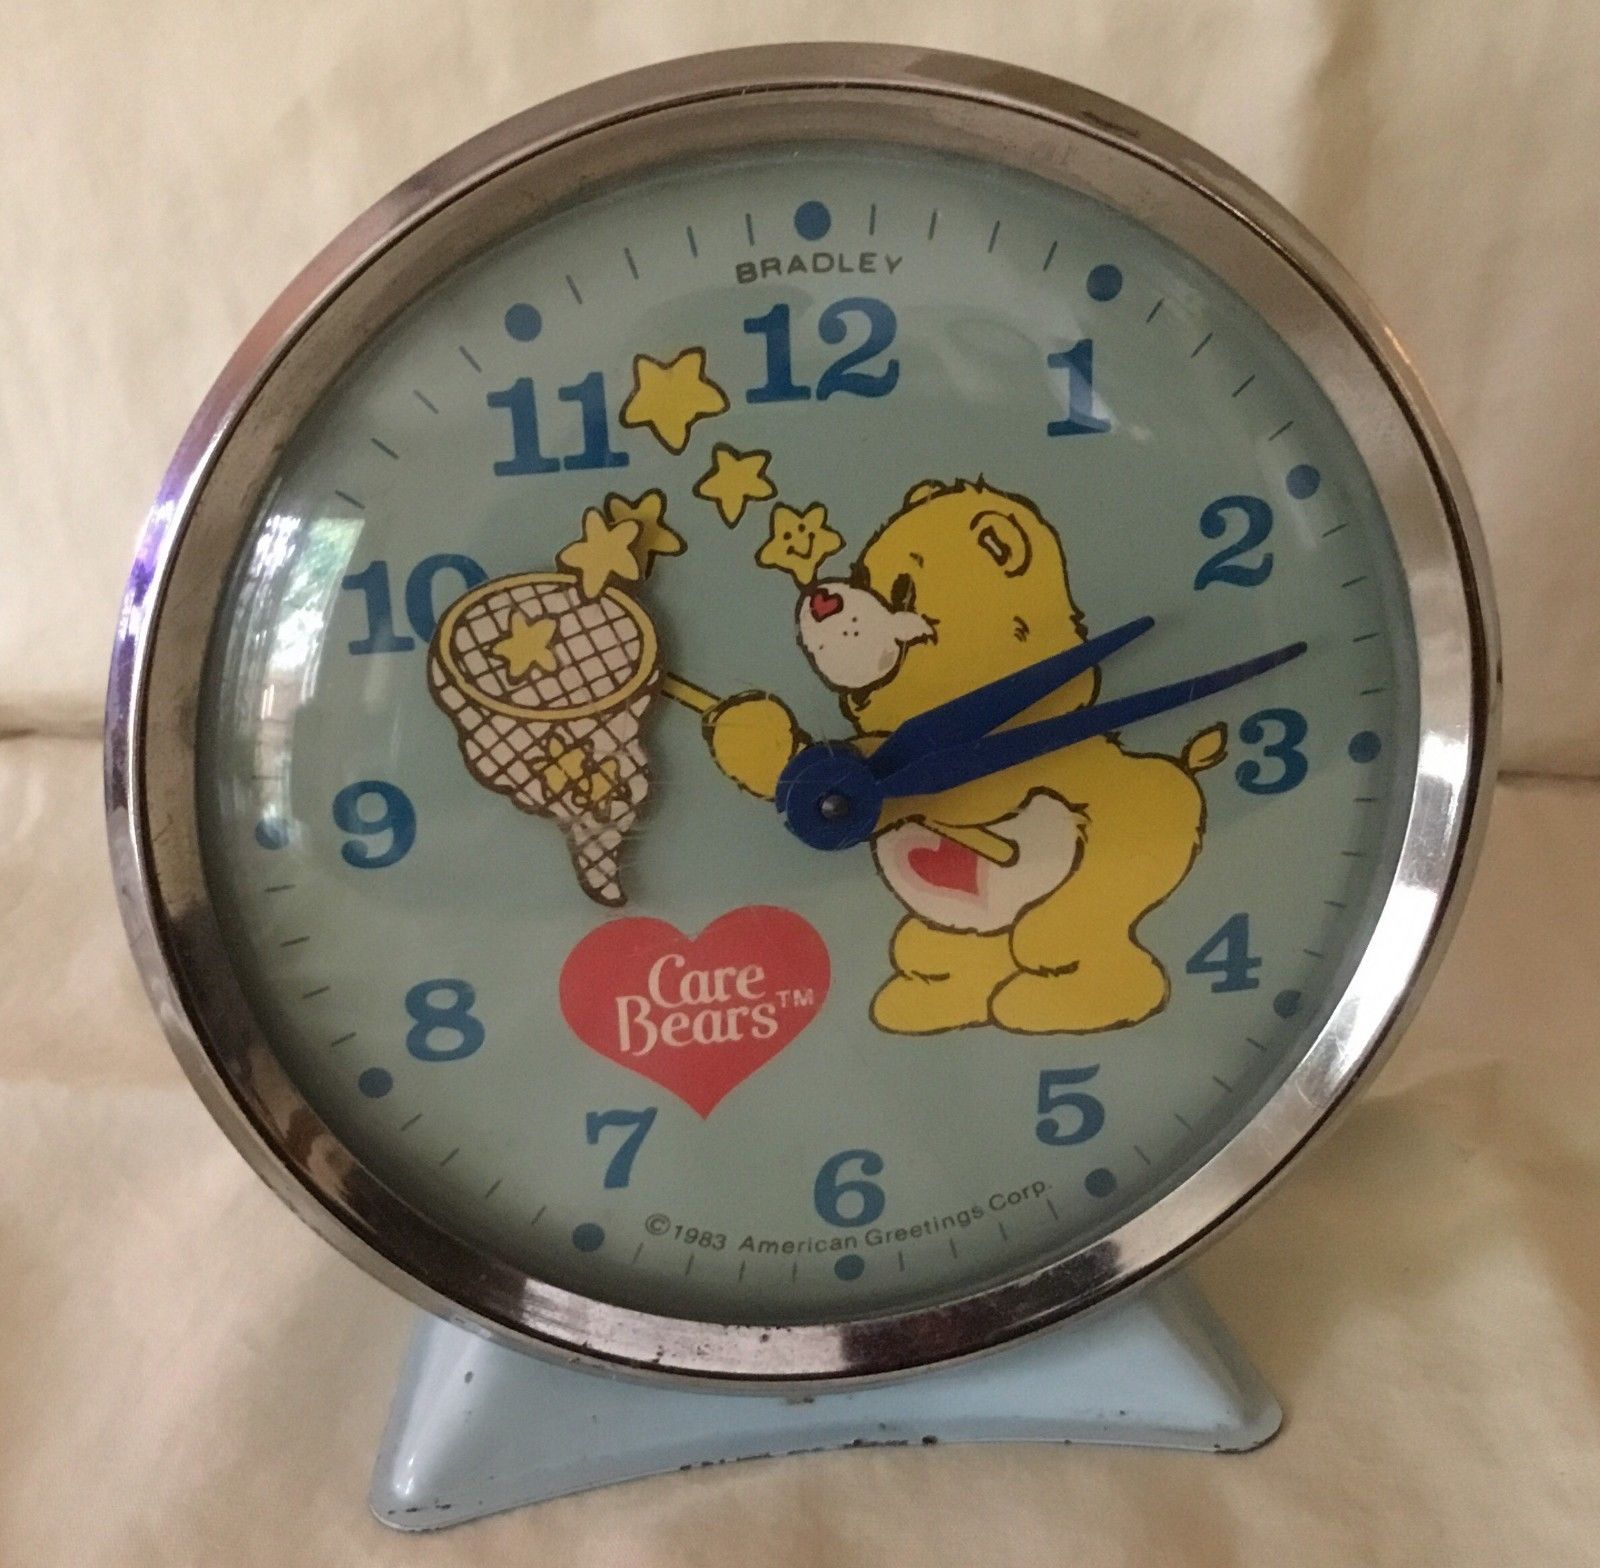 1983 Care Bears Animated Alarm Clock - Bradley Time